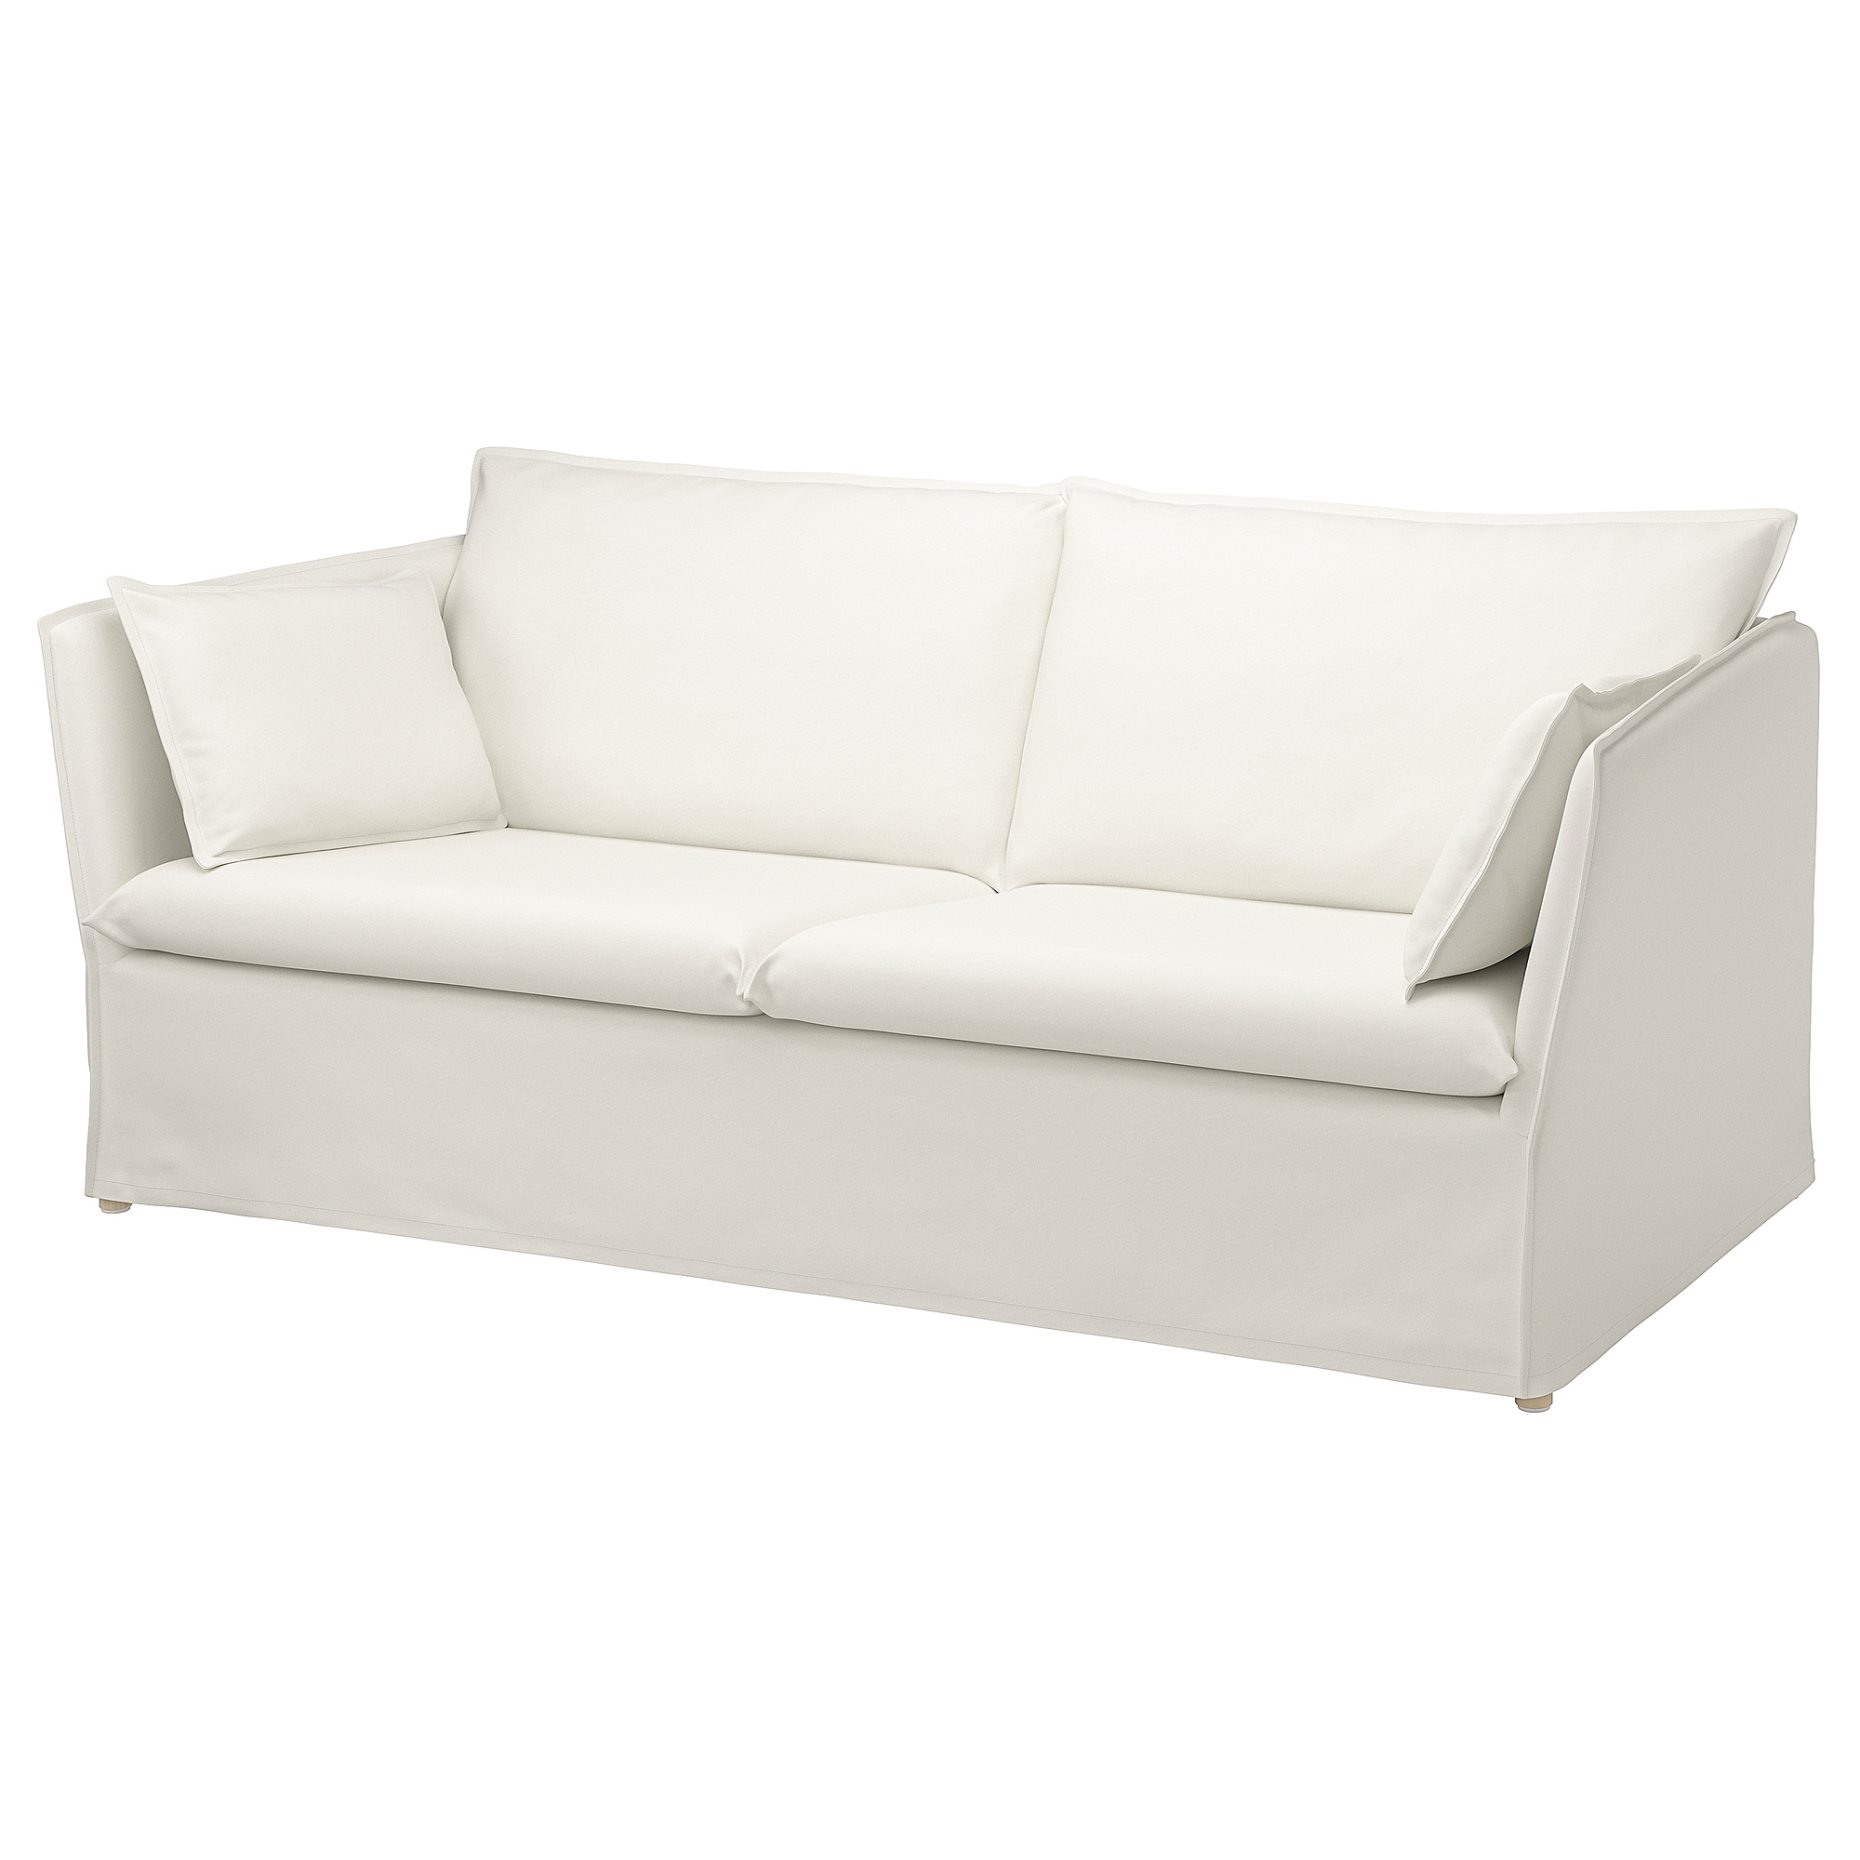 BACKSÄLEN, cover for 3-seat sofa, 004.971.99